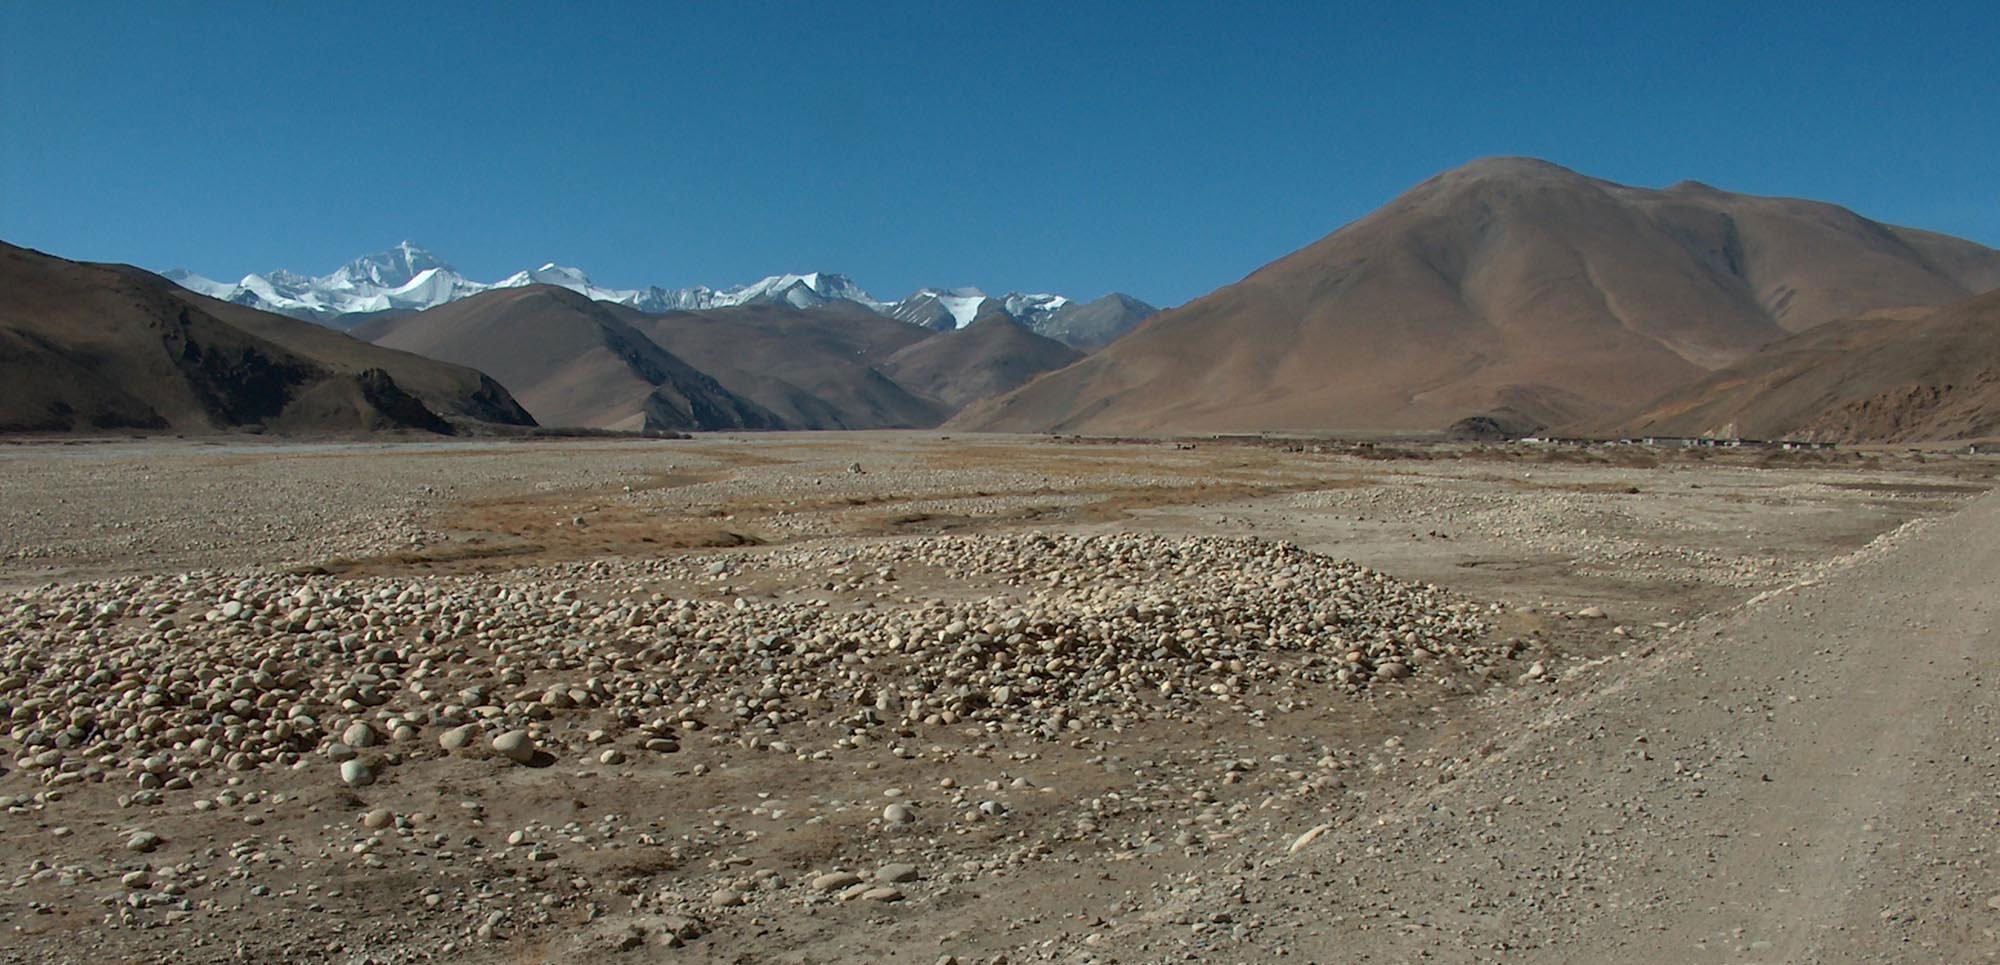 Mount Everest seen from the foothills in Tibet